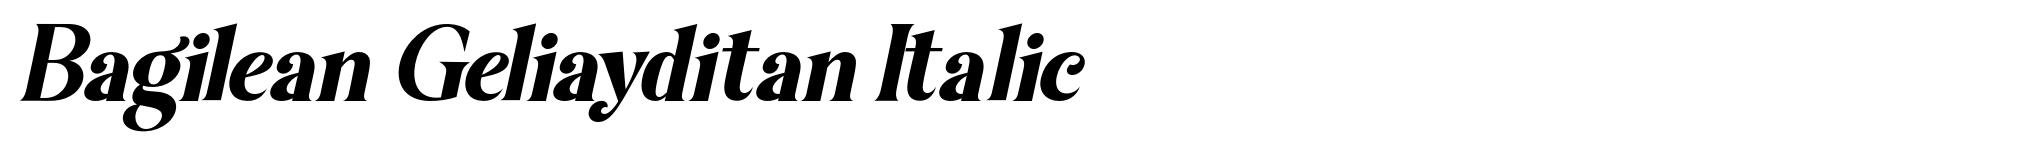 Bagilean Geliayditan Italic image